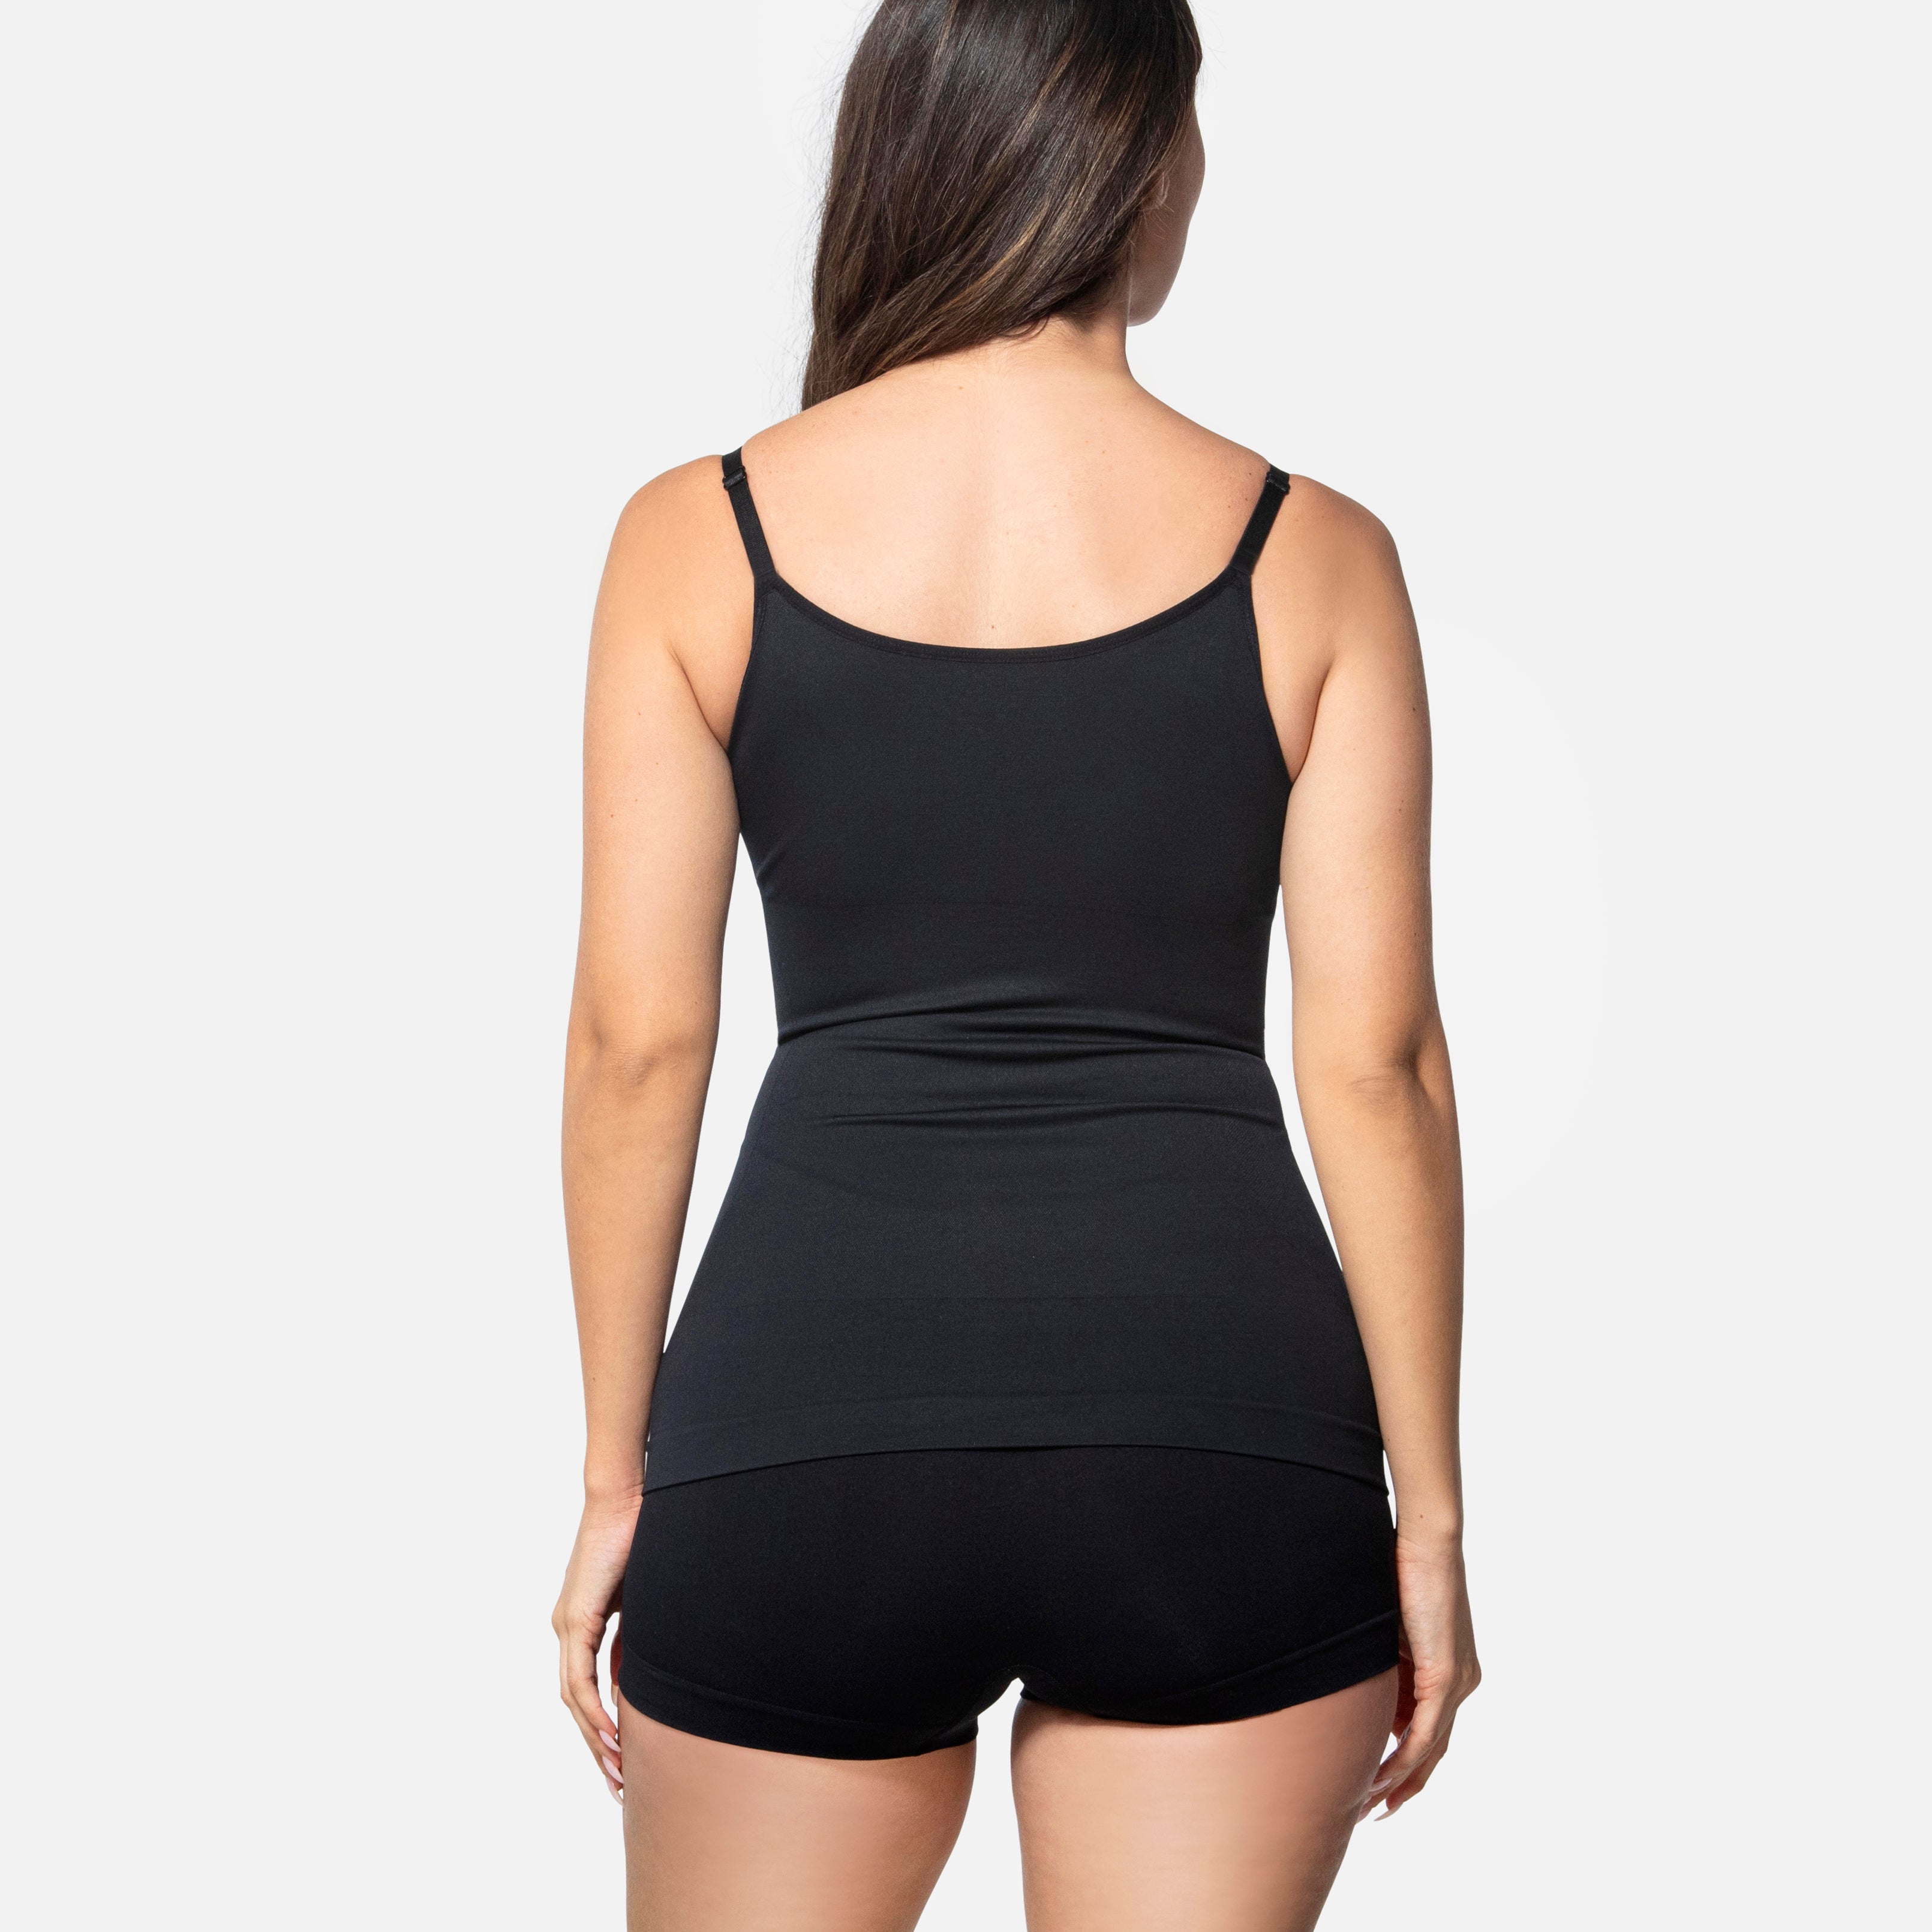 Buy 3NH® Body Shaper Tank Women Shapers Cami Vest Shirt Tops